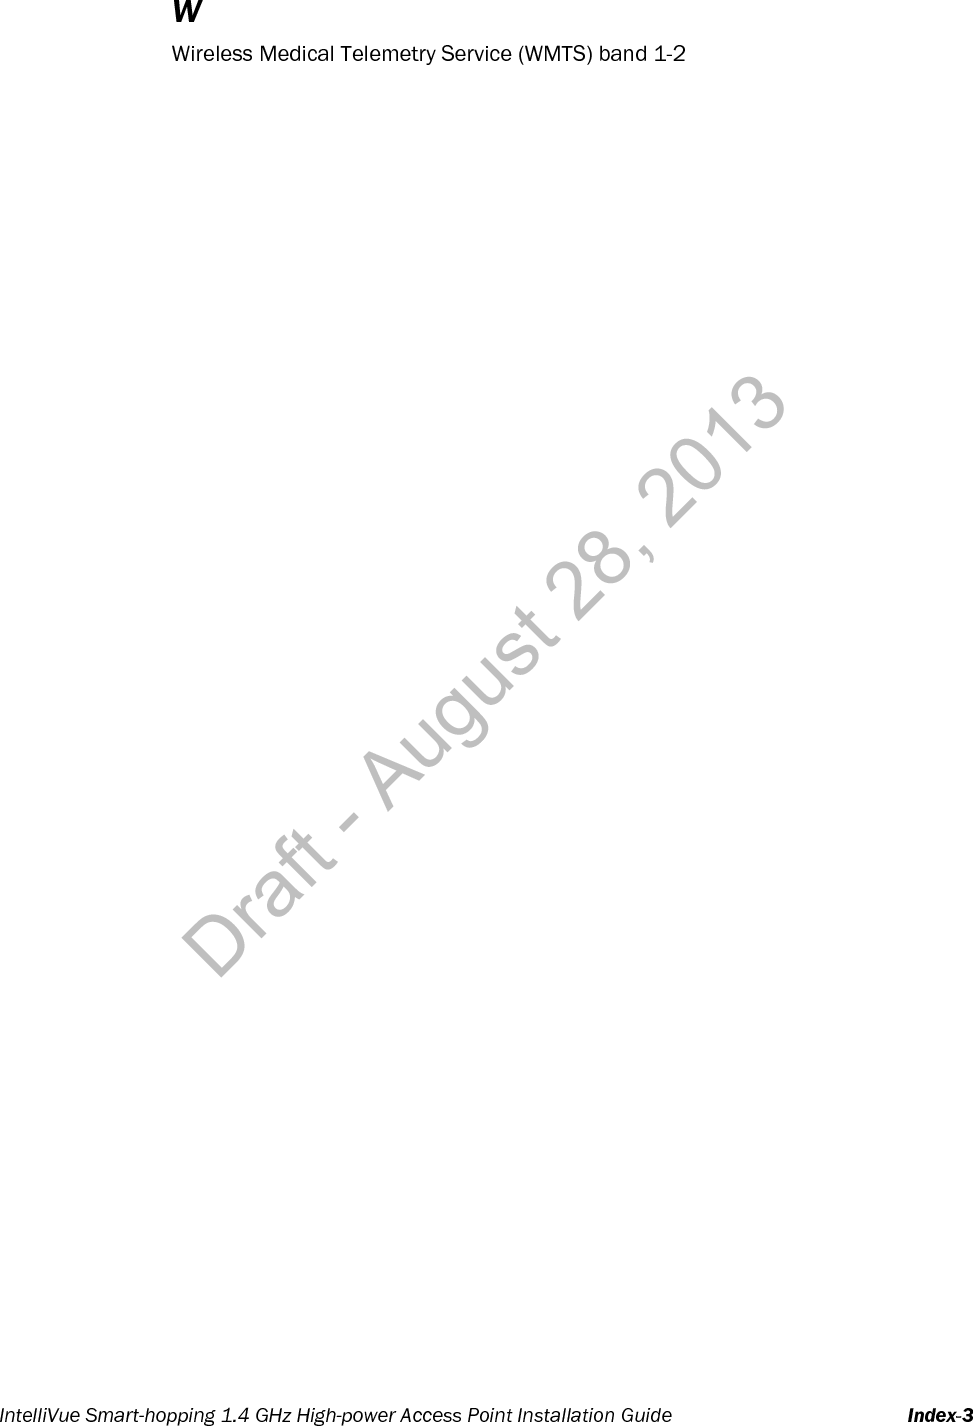 Index-4Draft - August 28, 2013